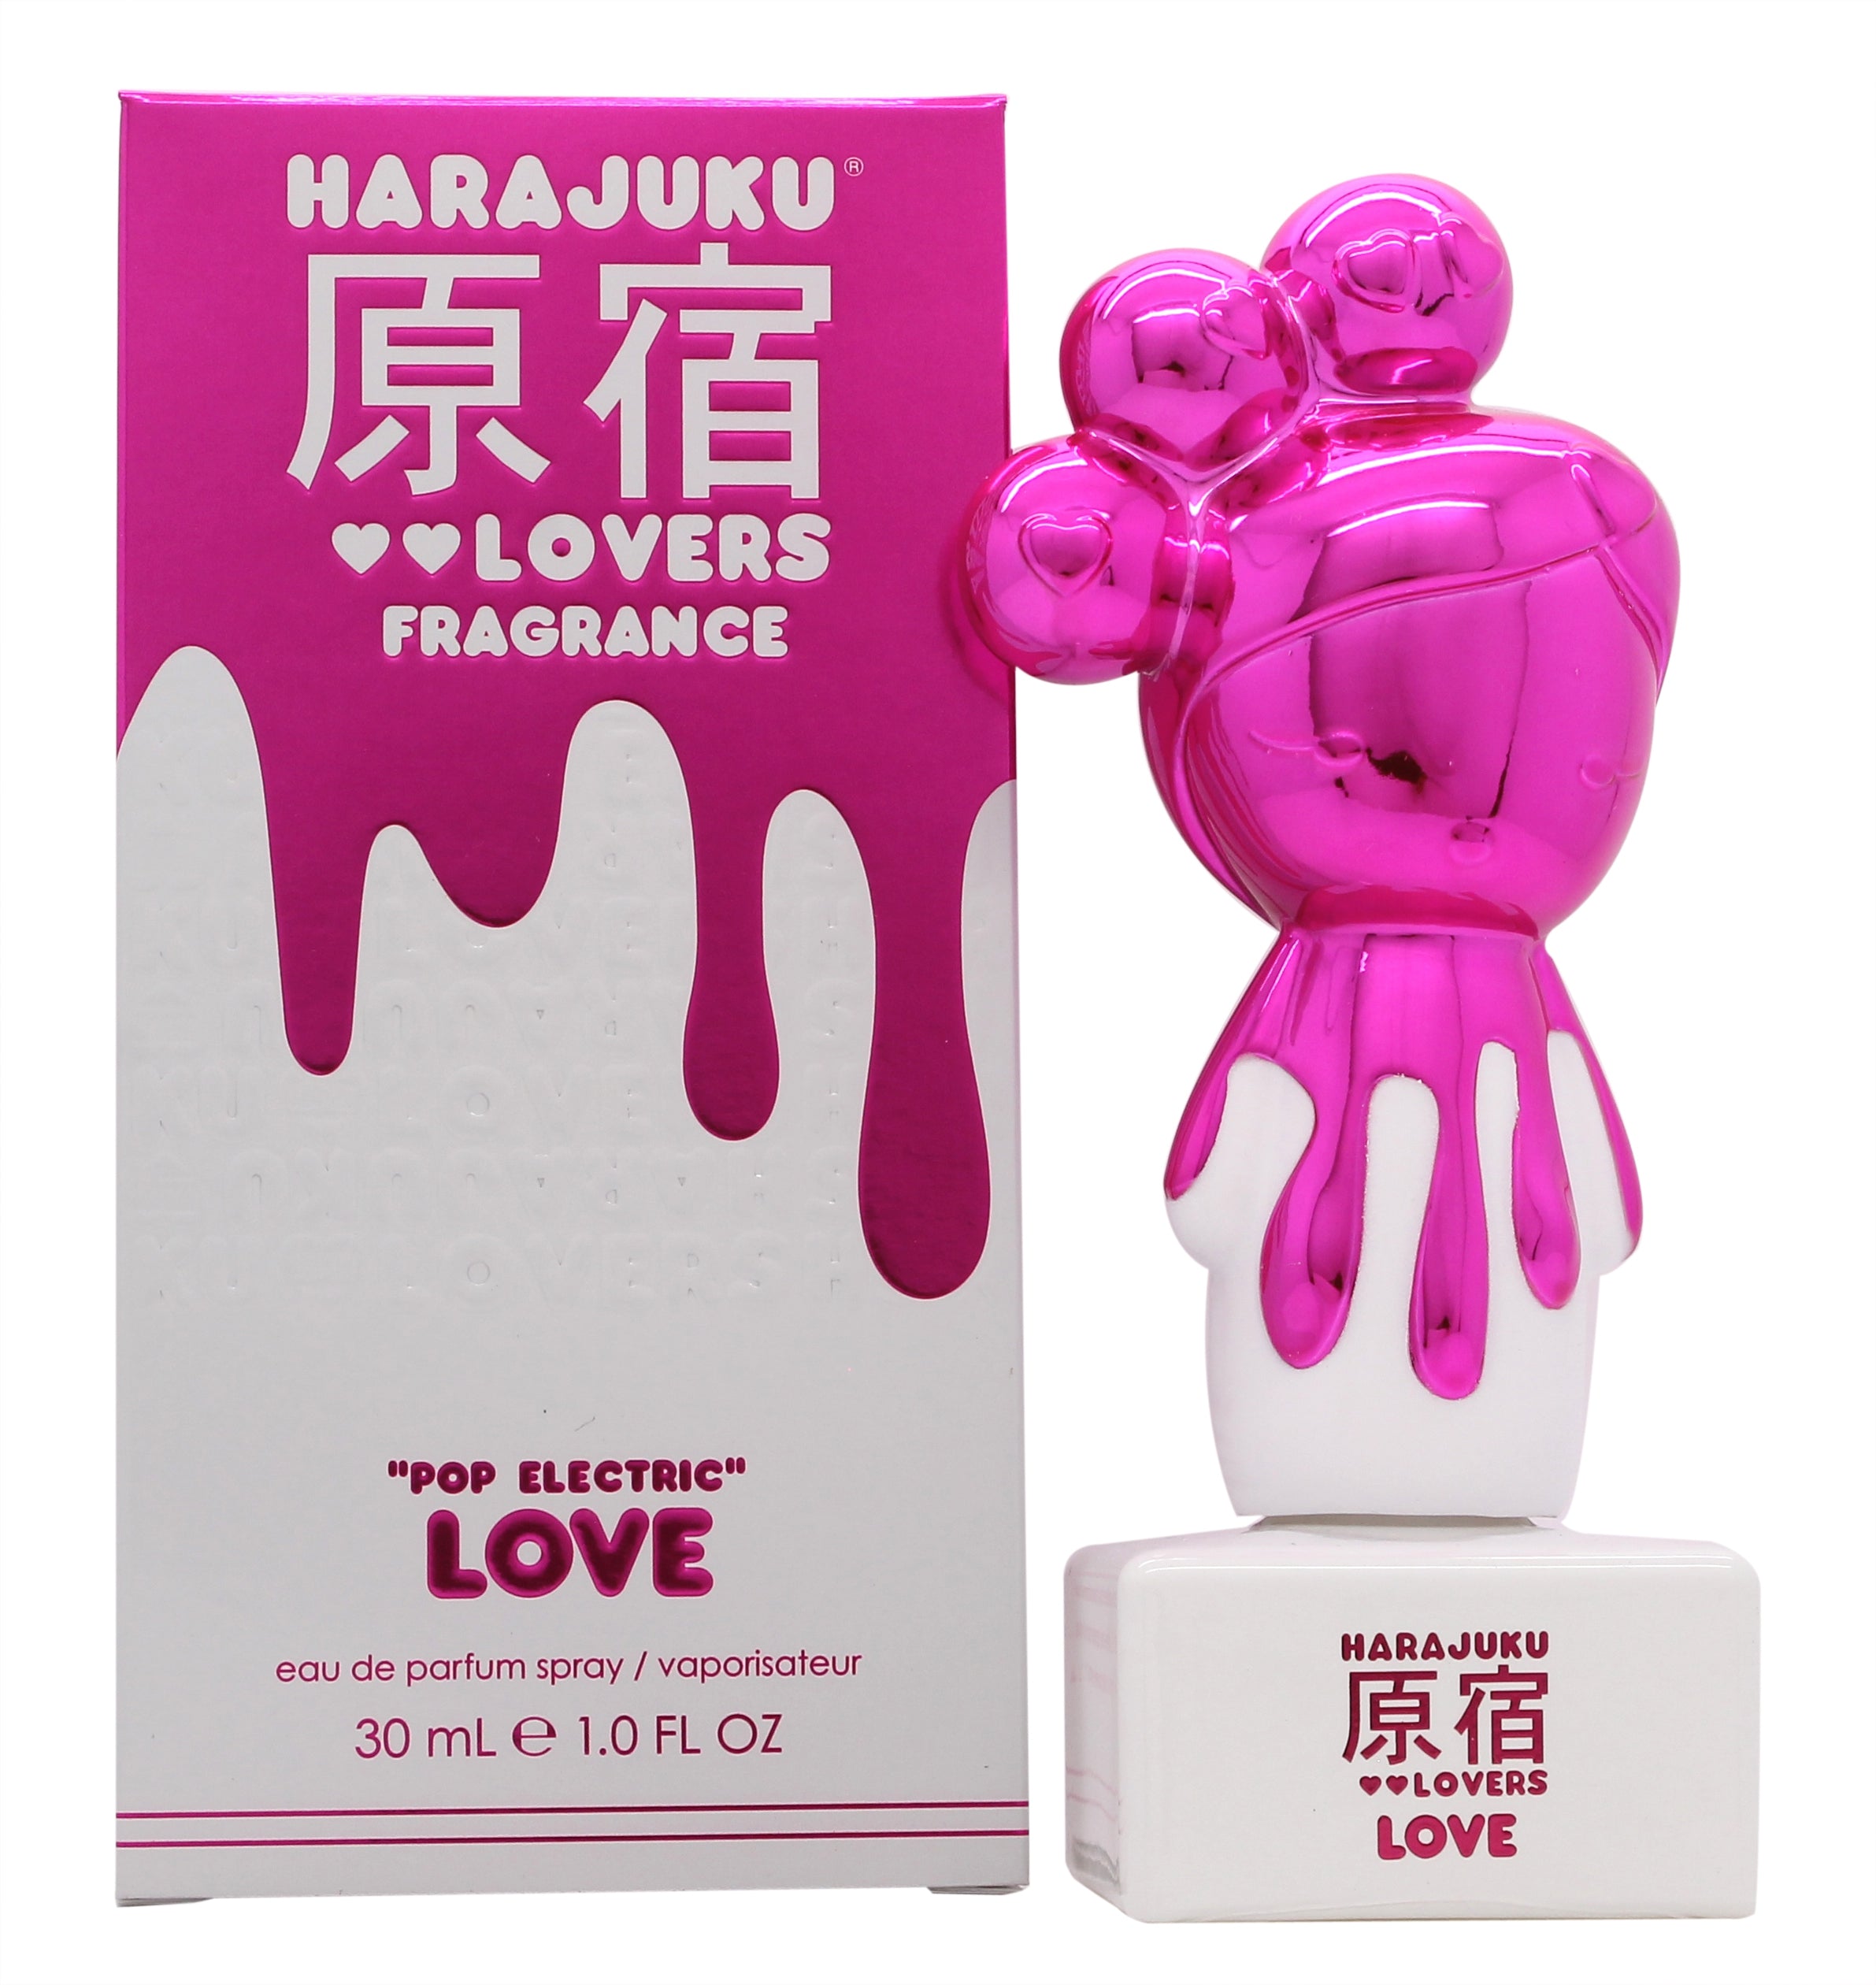 View Gwen Stefani Harajuku Lovers Pop Electric Love Eau De Parfum 30ml Spray information